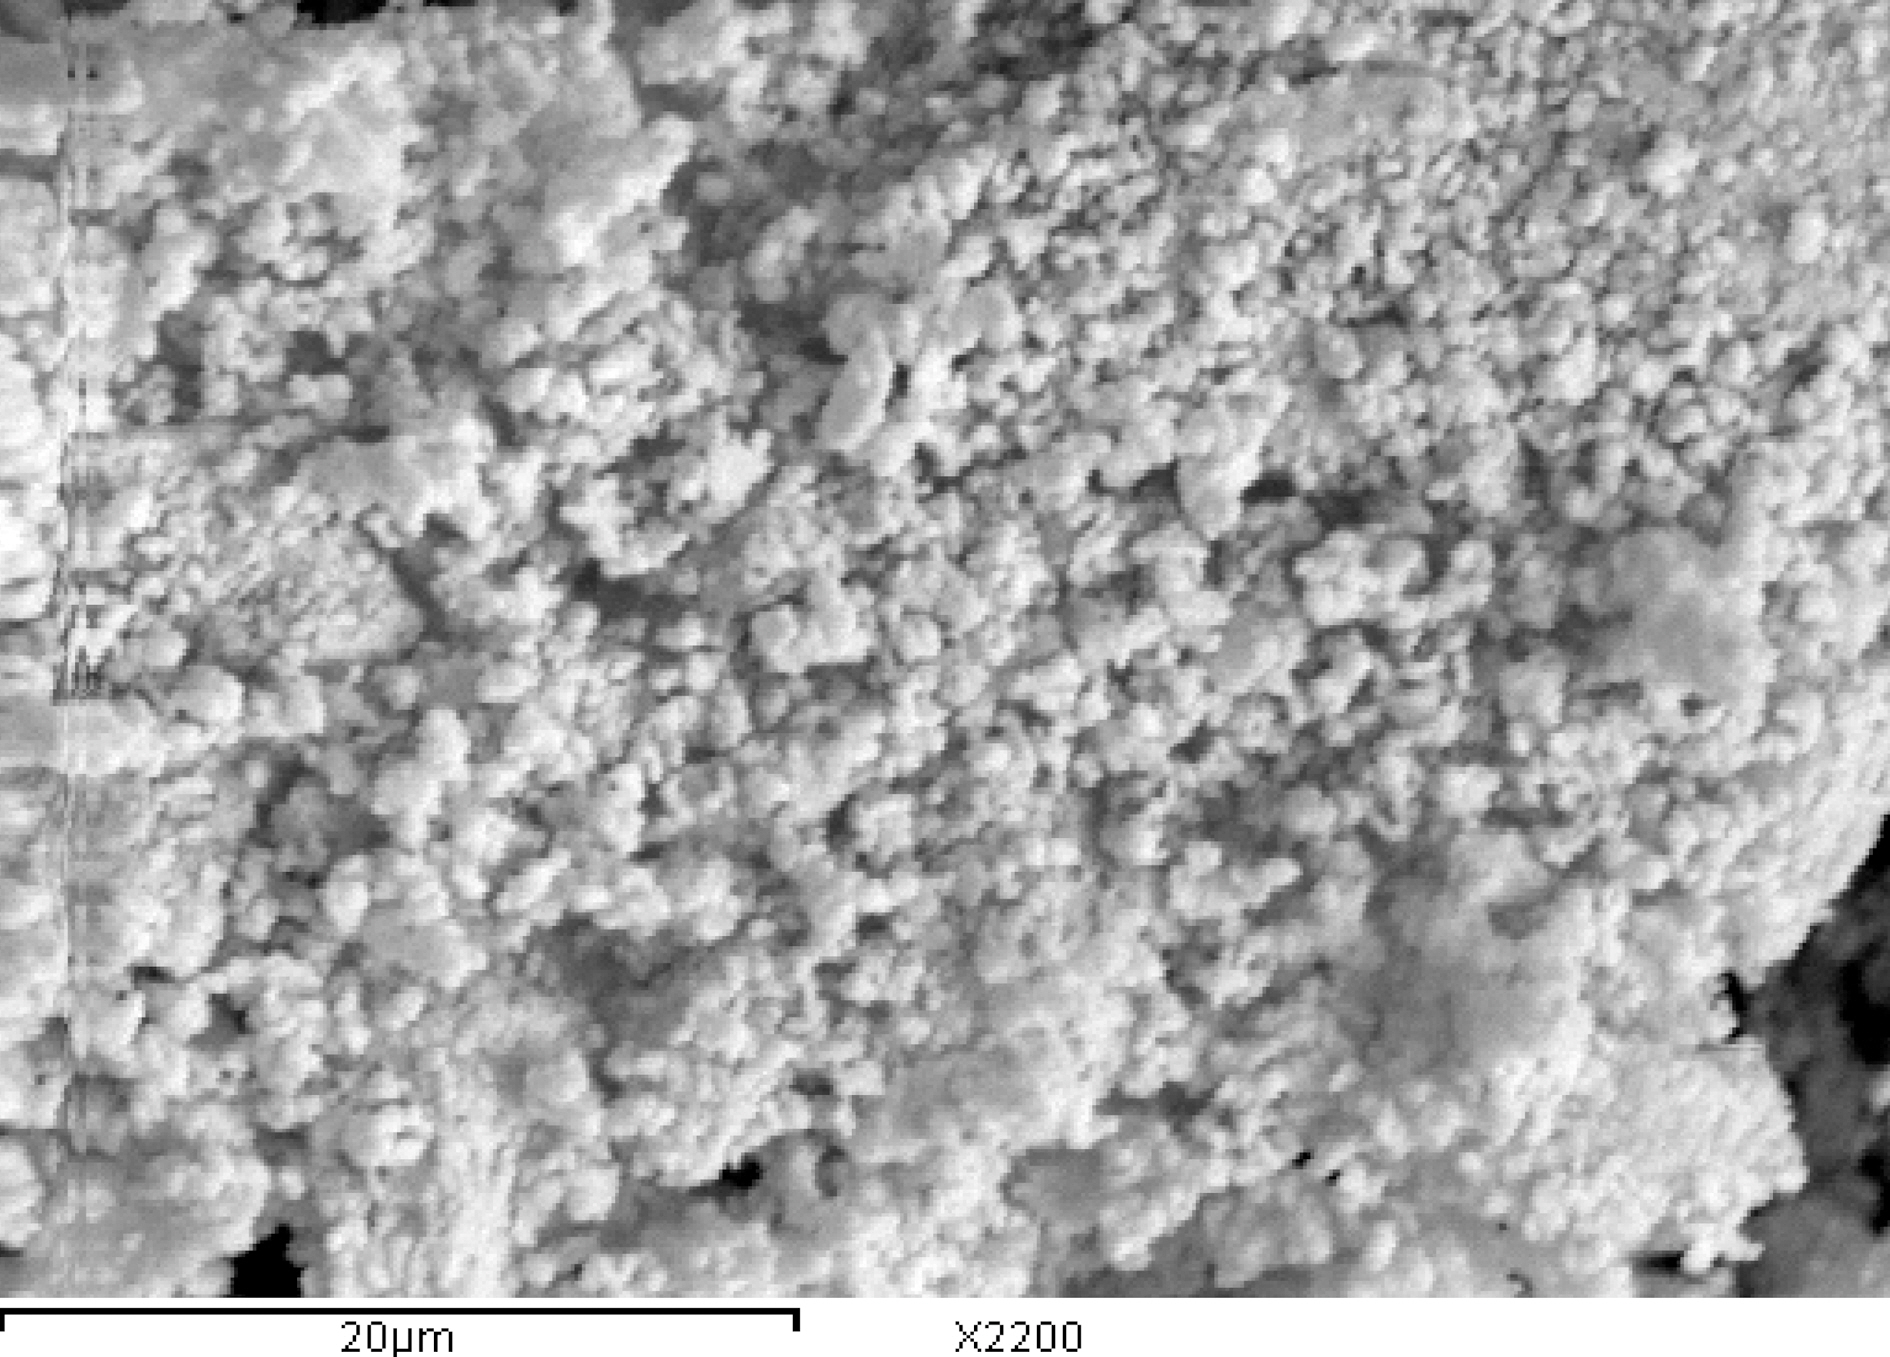 SEM micrographs of kaolin.